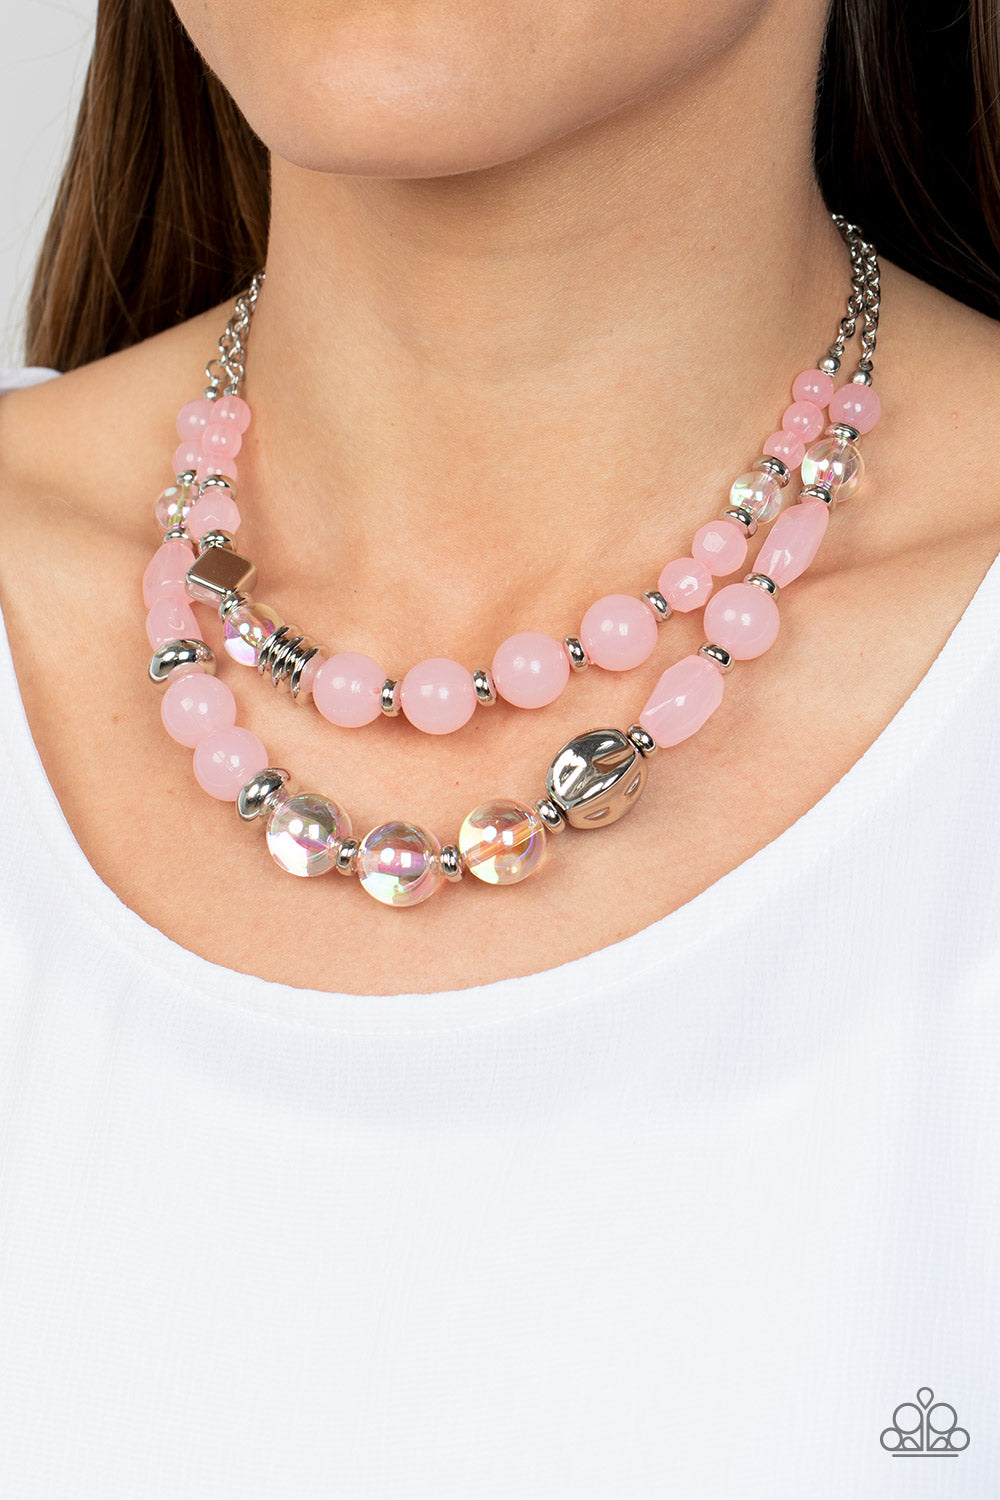 Paparazzi Mere Magic - Pink Necklace-Paparazzi Jewelry Images